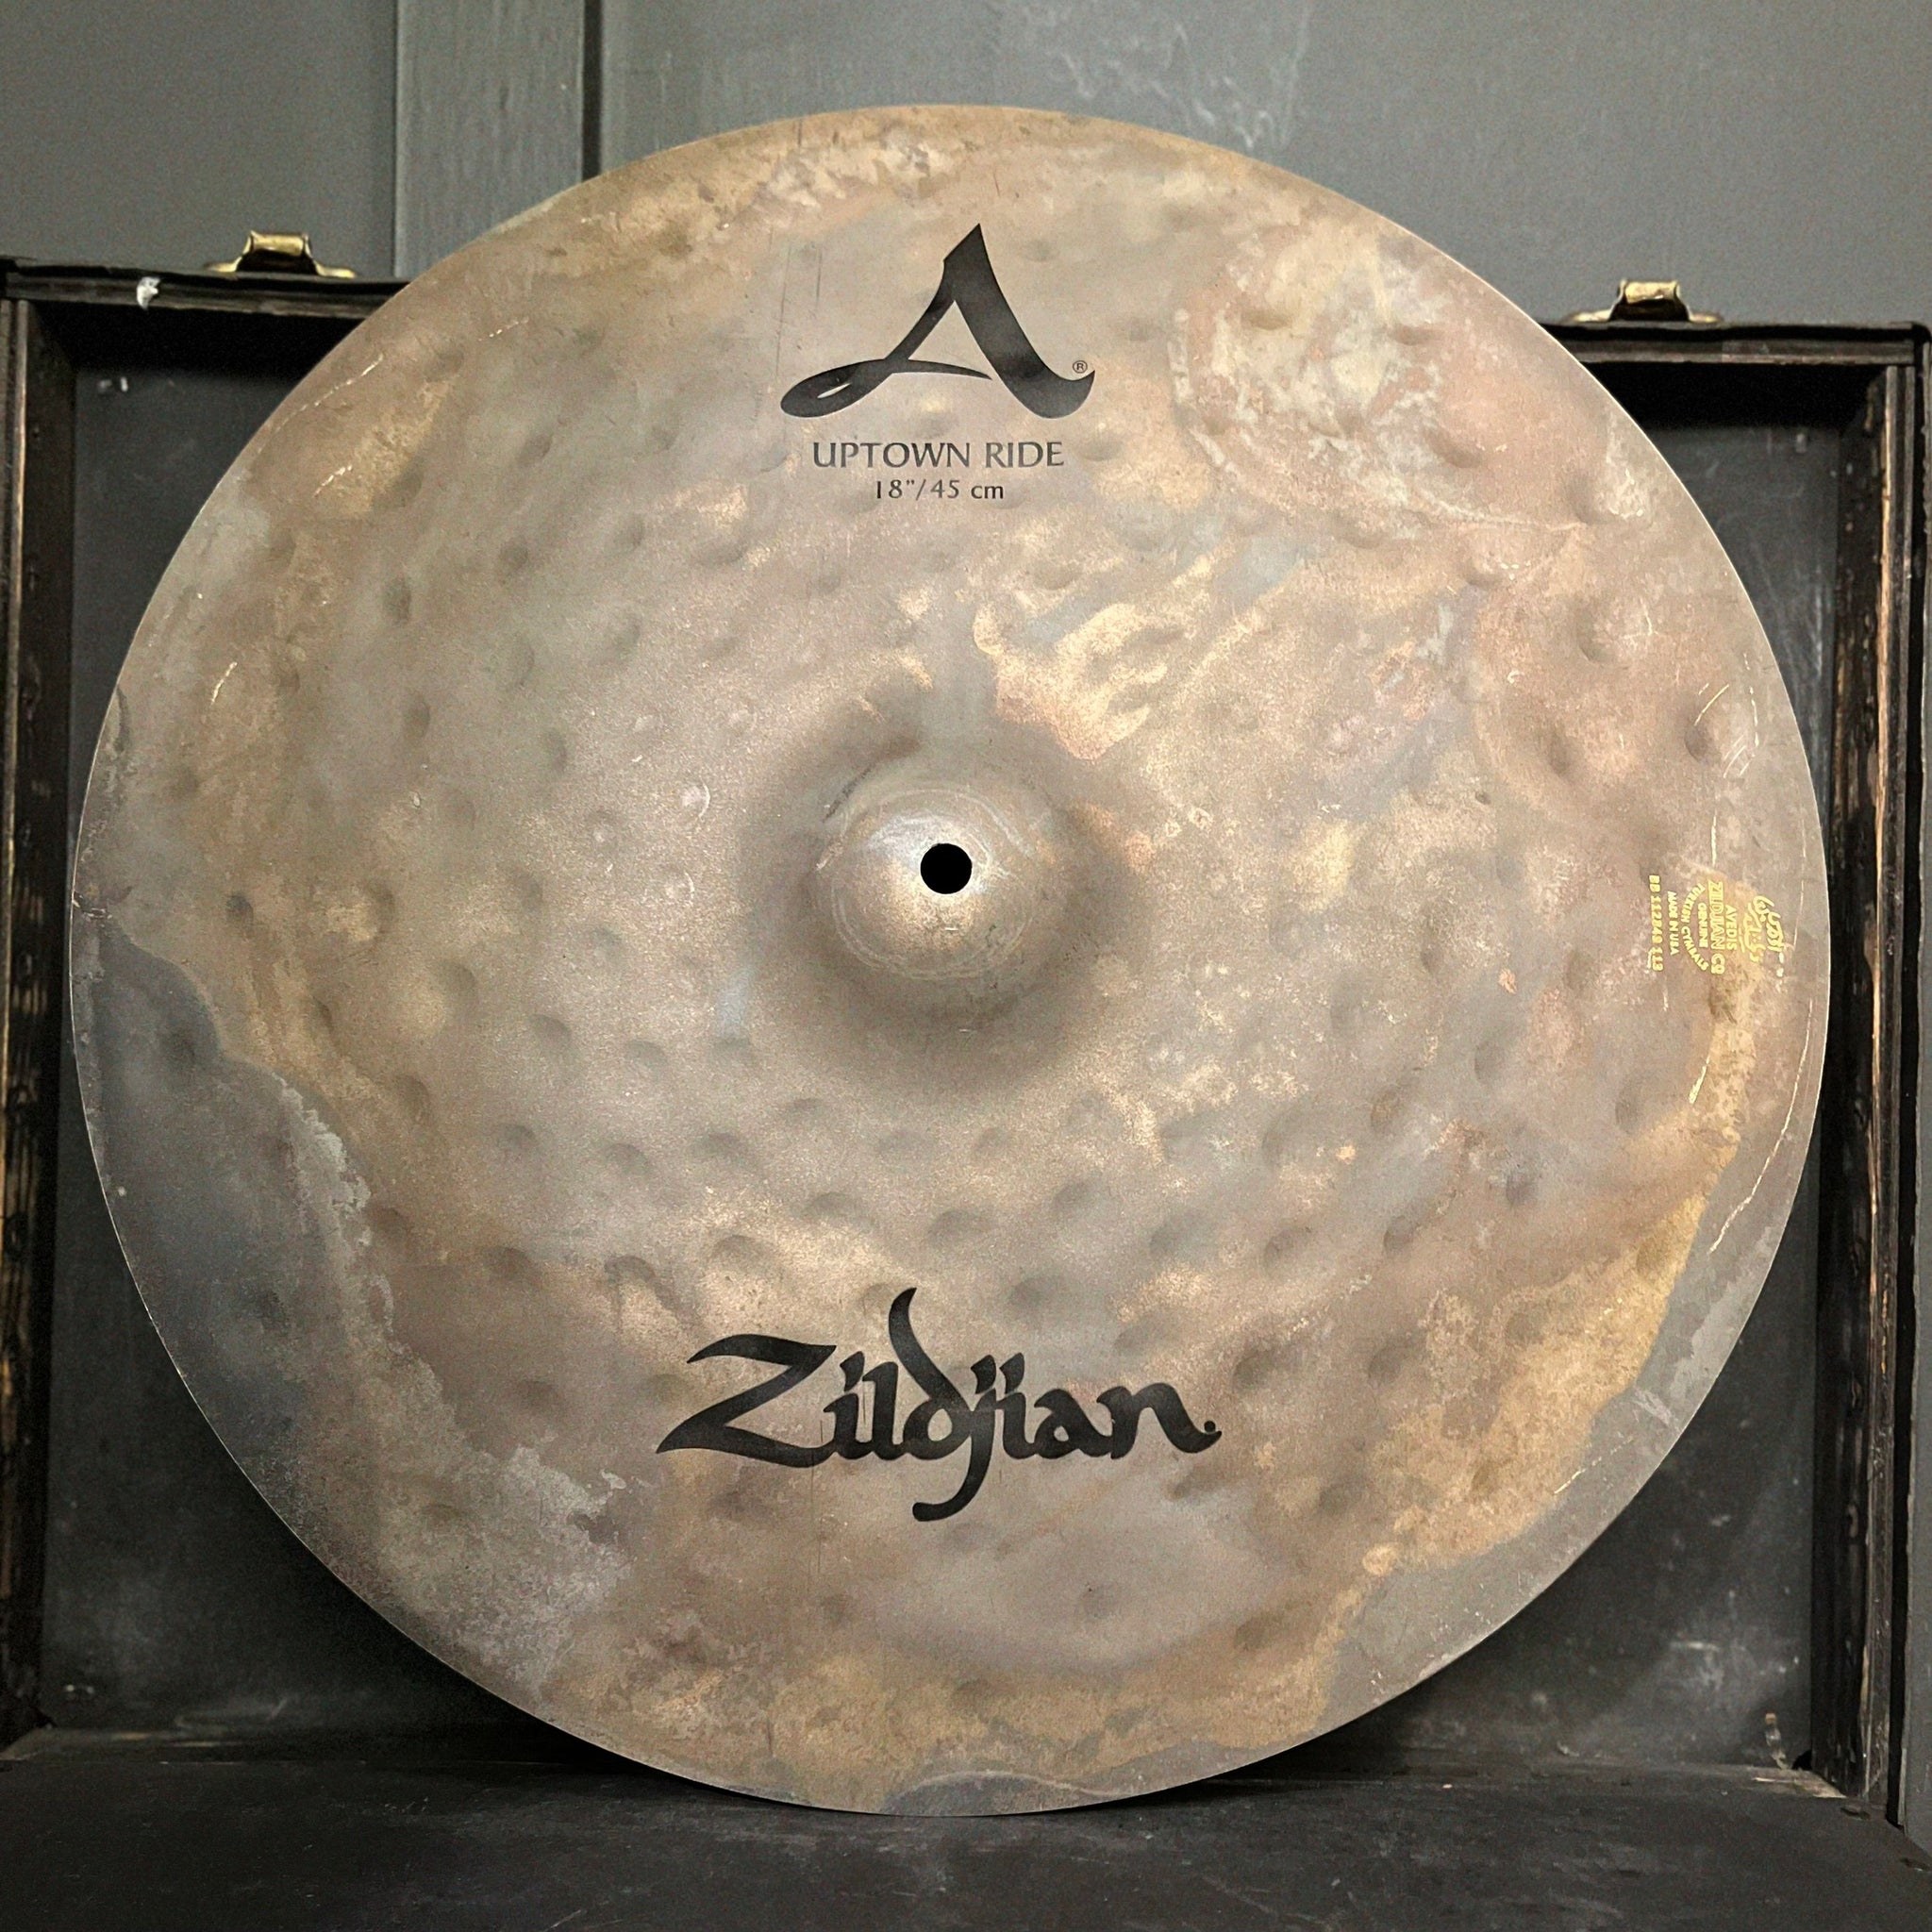 NEW Zildjian 18" A. Zildjian Uptown Ride Cymbal - 1704g